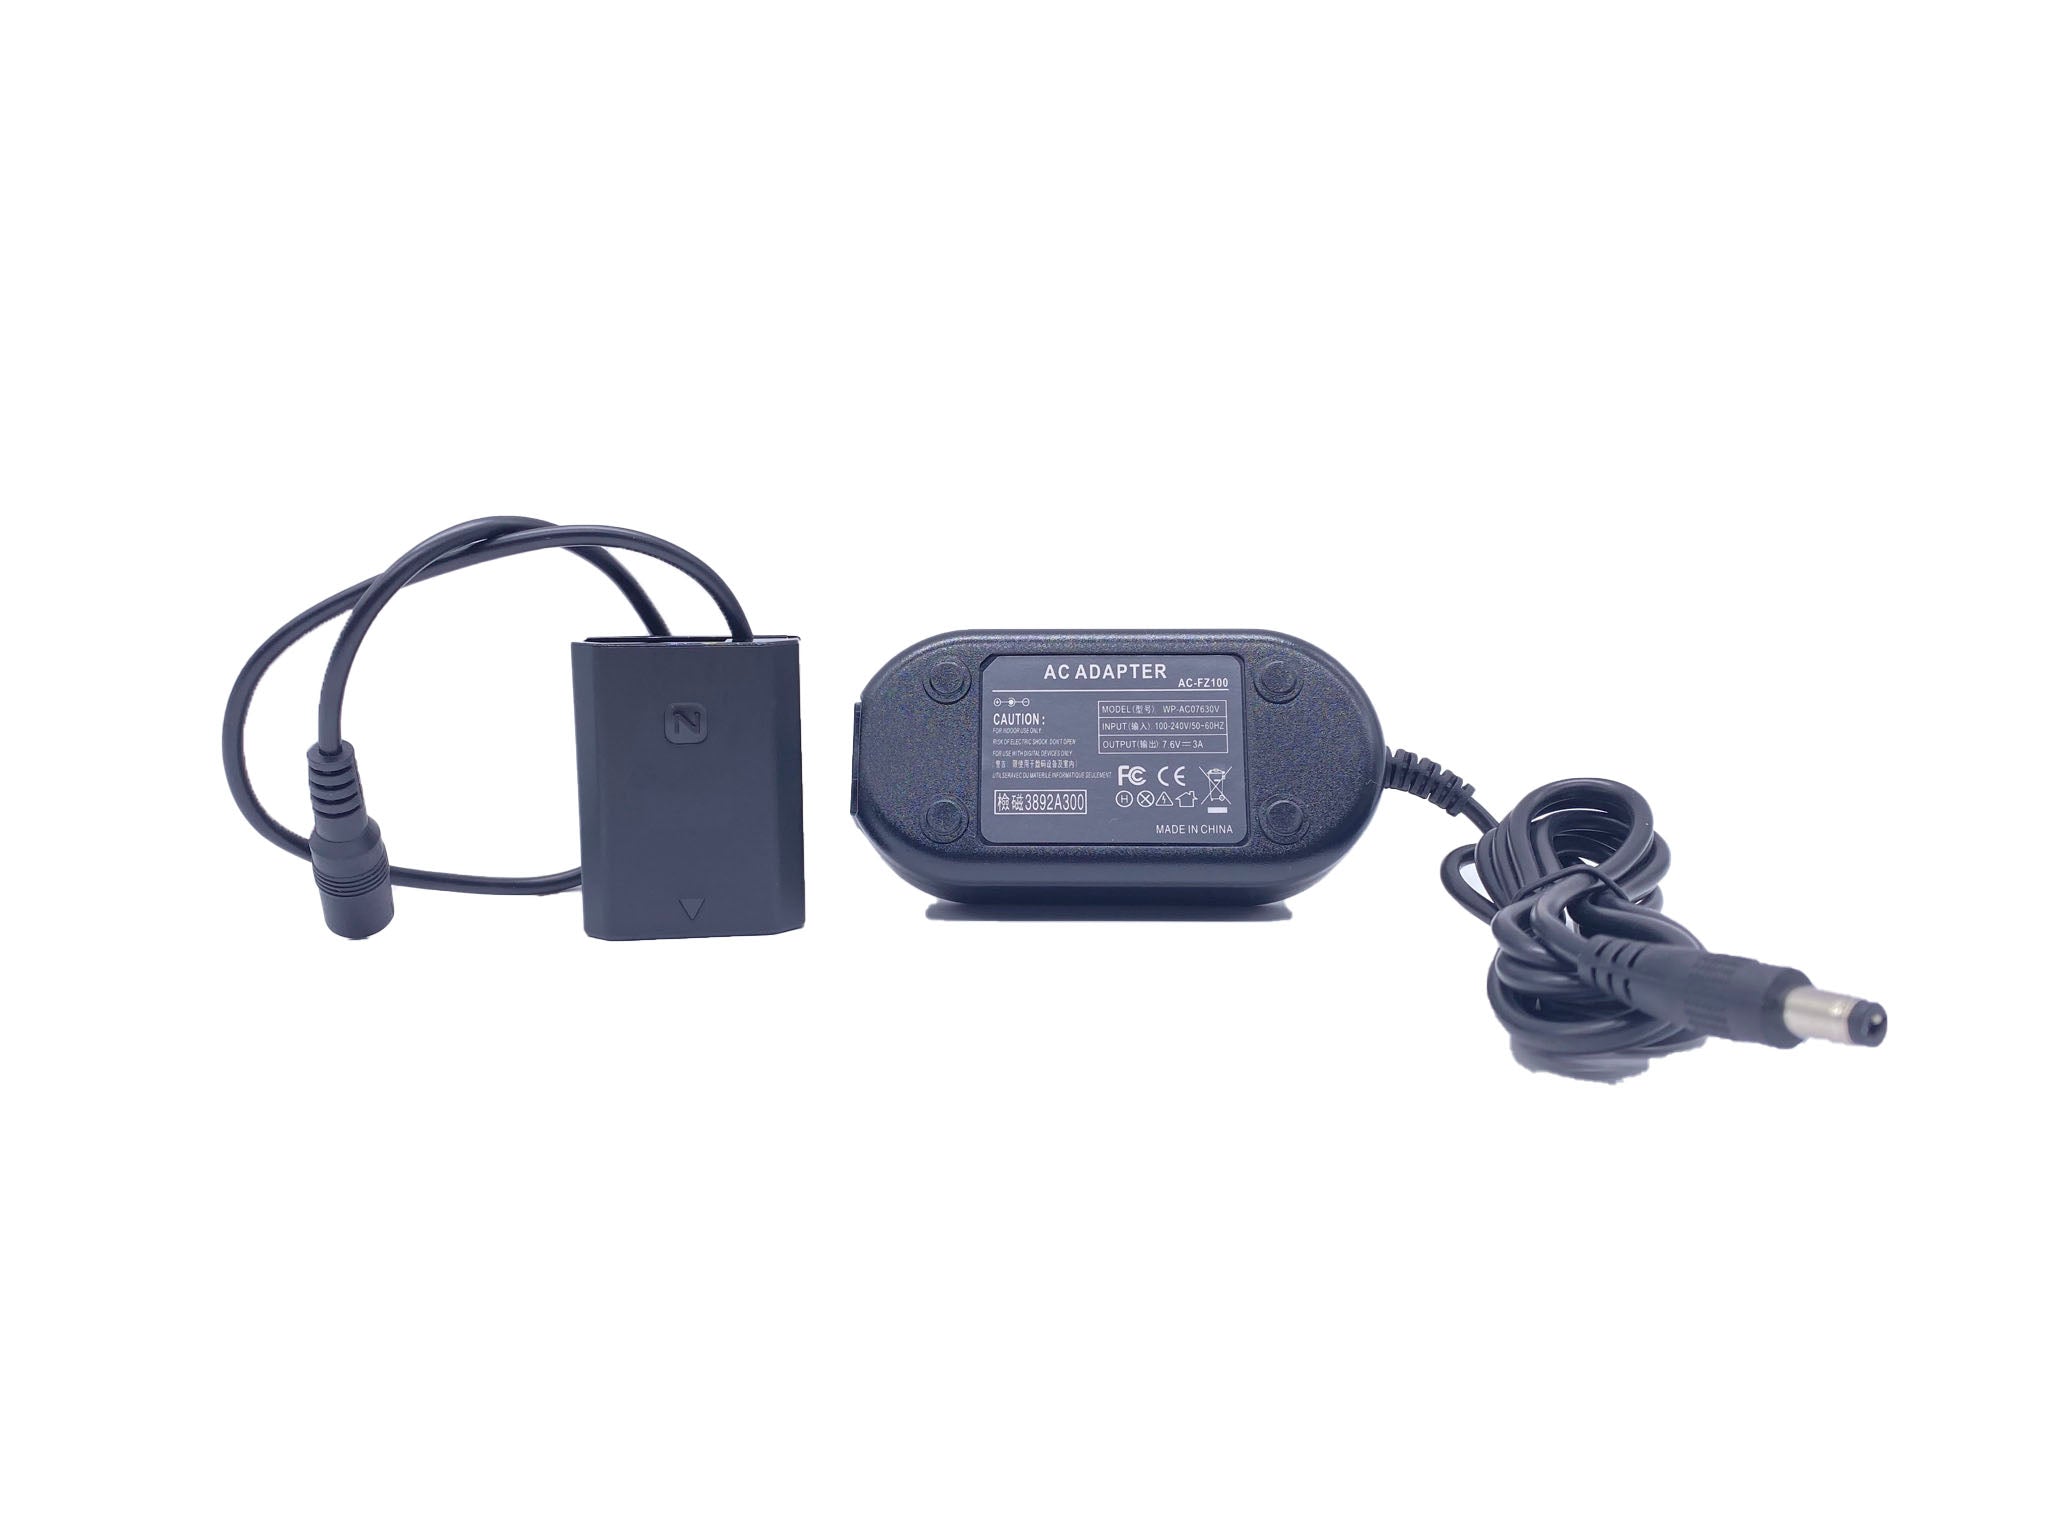 GPB DC Coupler AC-FZ100 For Sony NP-FZ100 Camera tek